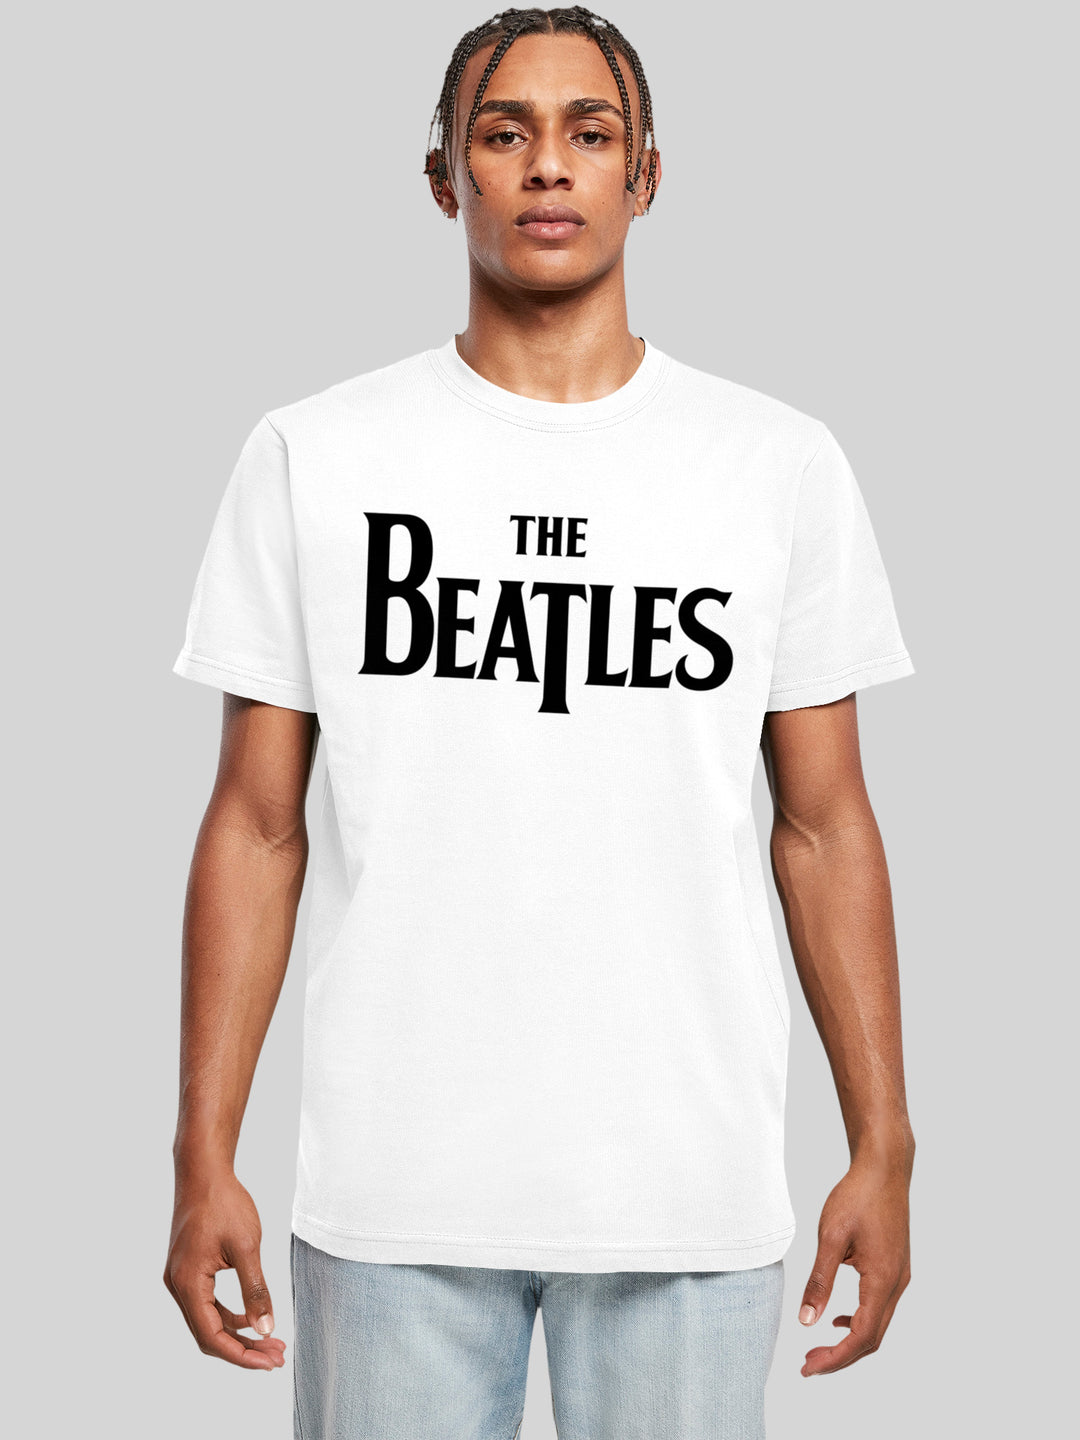 T Logo Shirt Beatles Black T T-Shirt Men | – Drop The Premium | F4NT4STIC